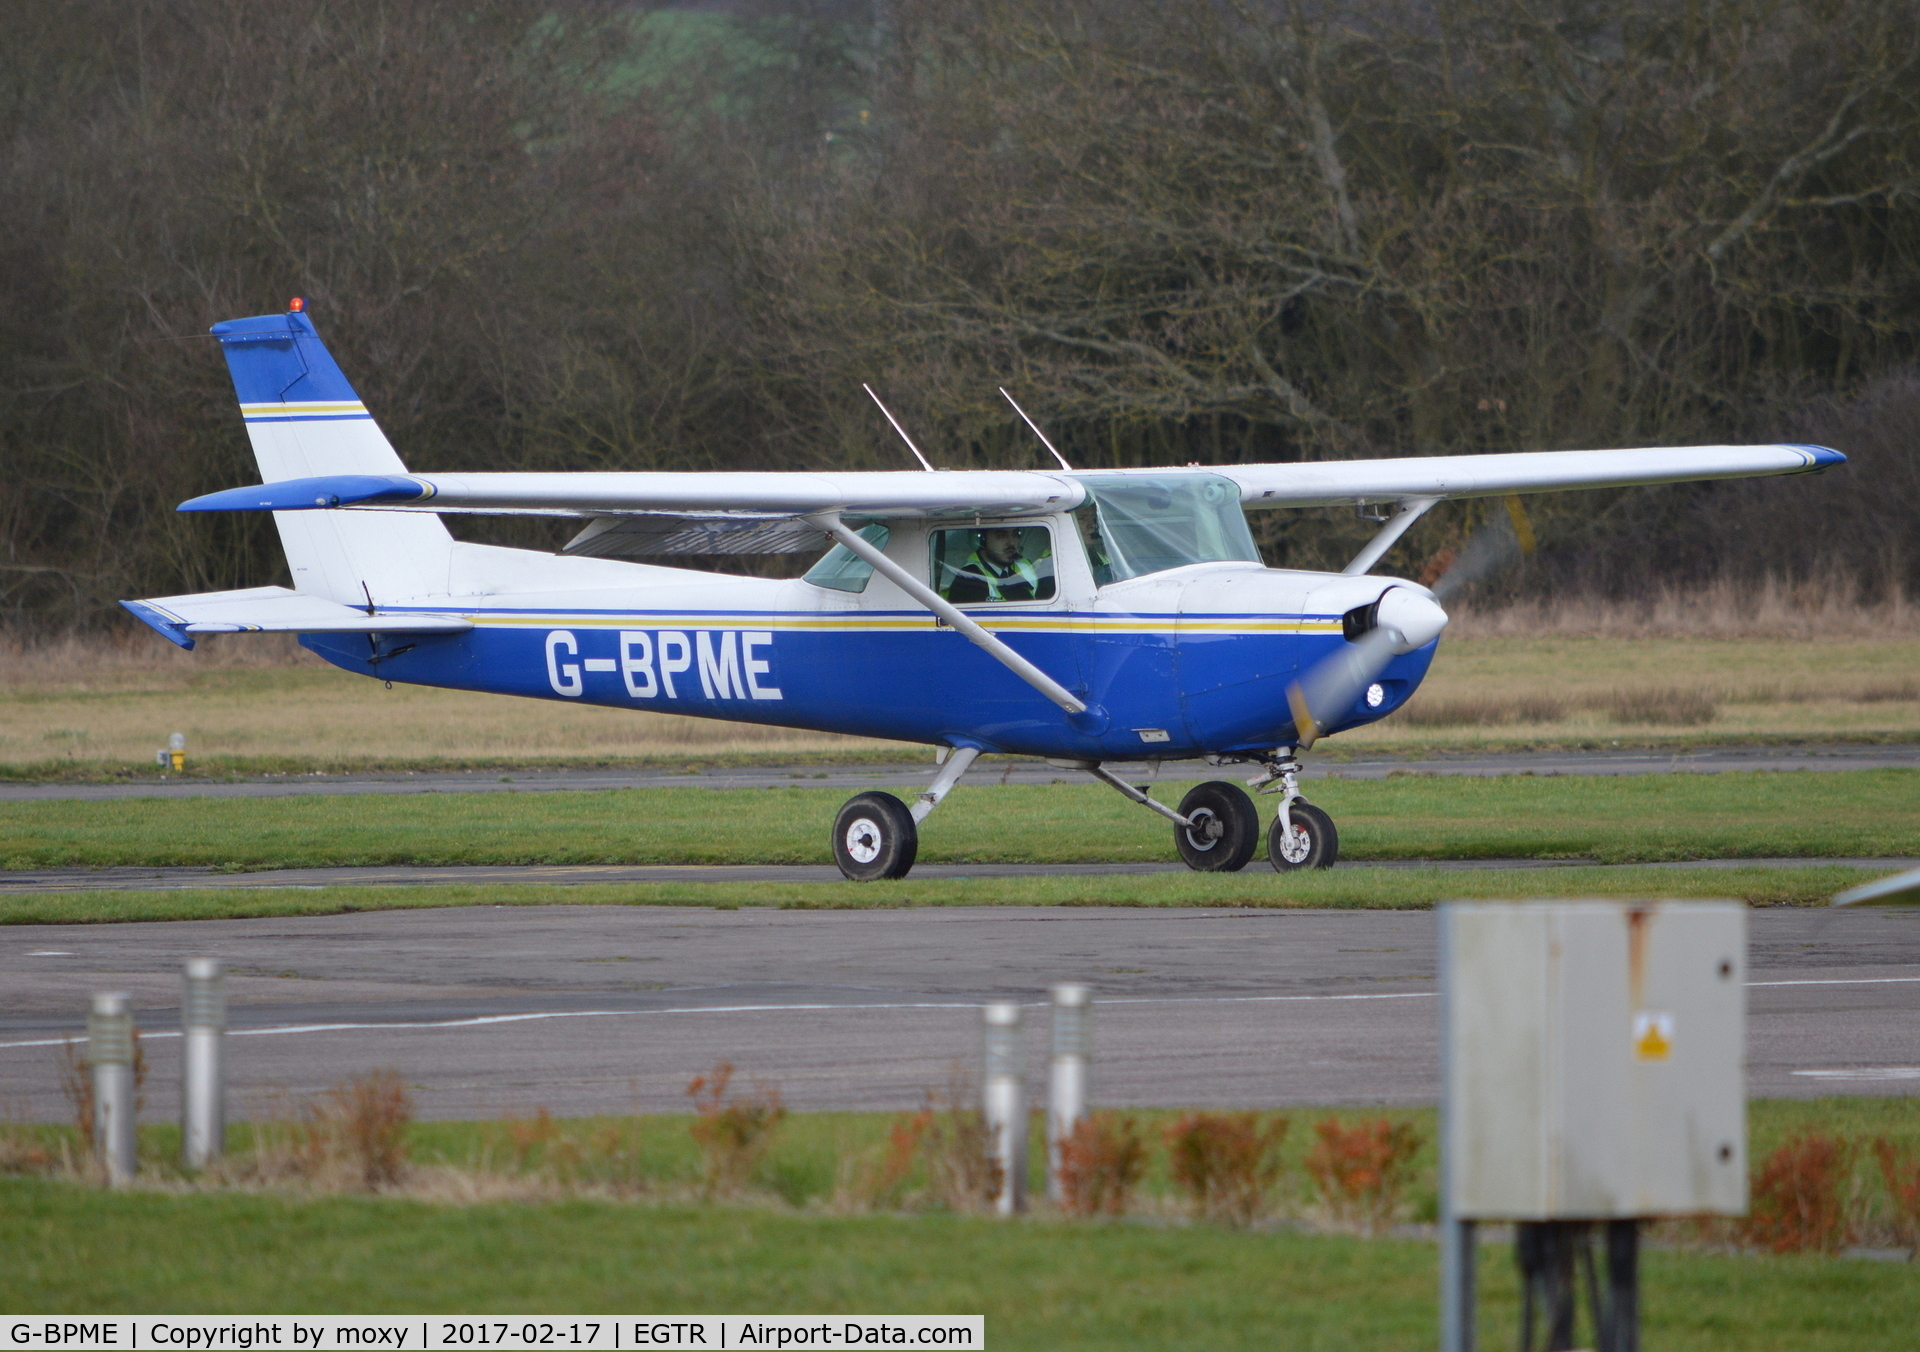 G-BPME, 1982 Cessna 152 C/N 152-85585, Cessna 152 at Elstree. Ex N94021